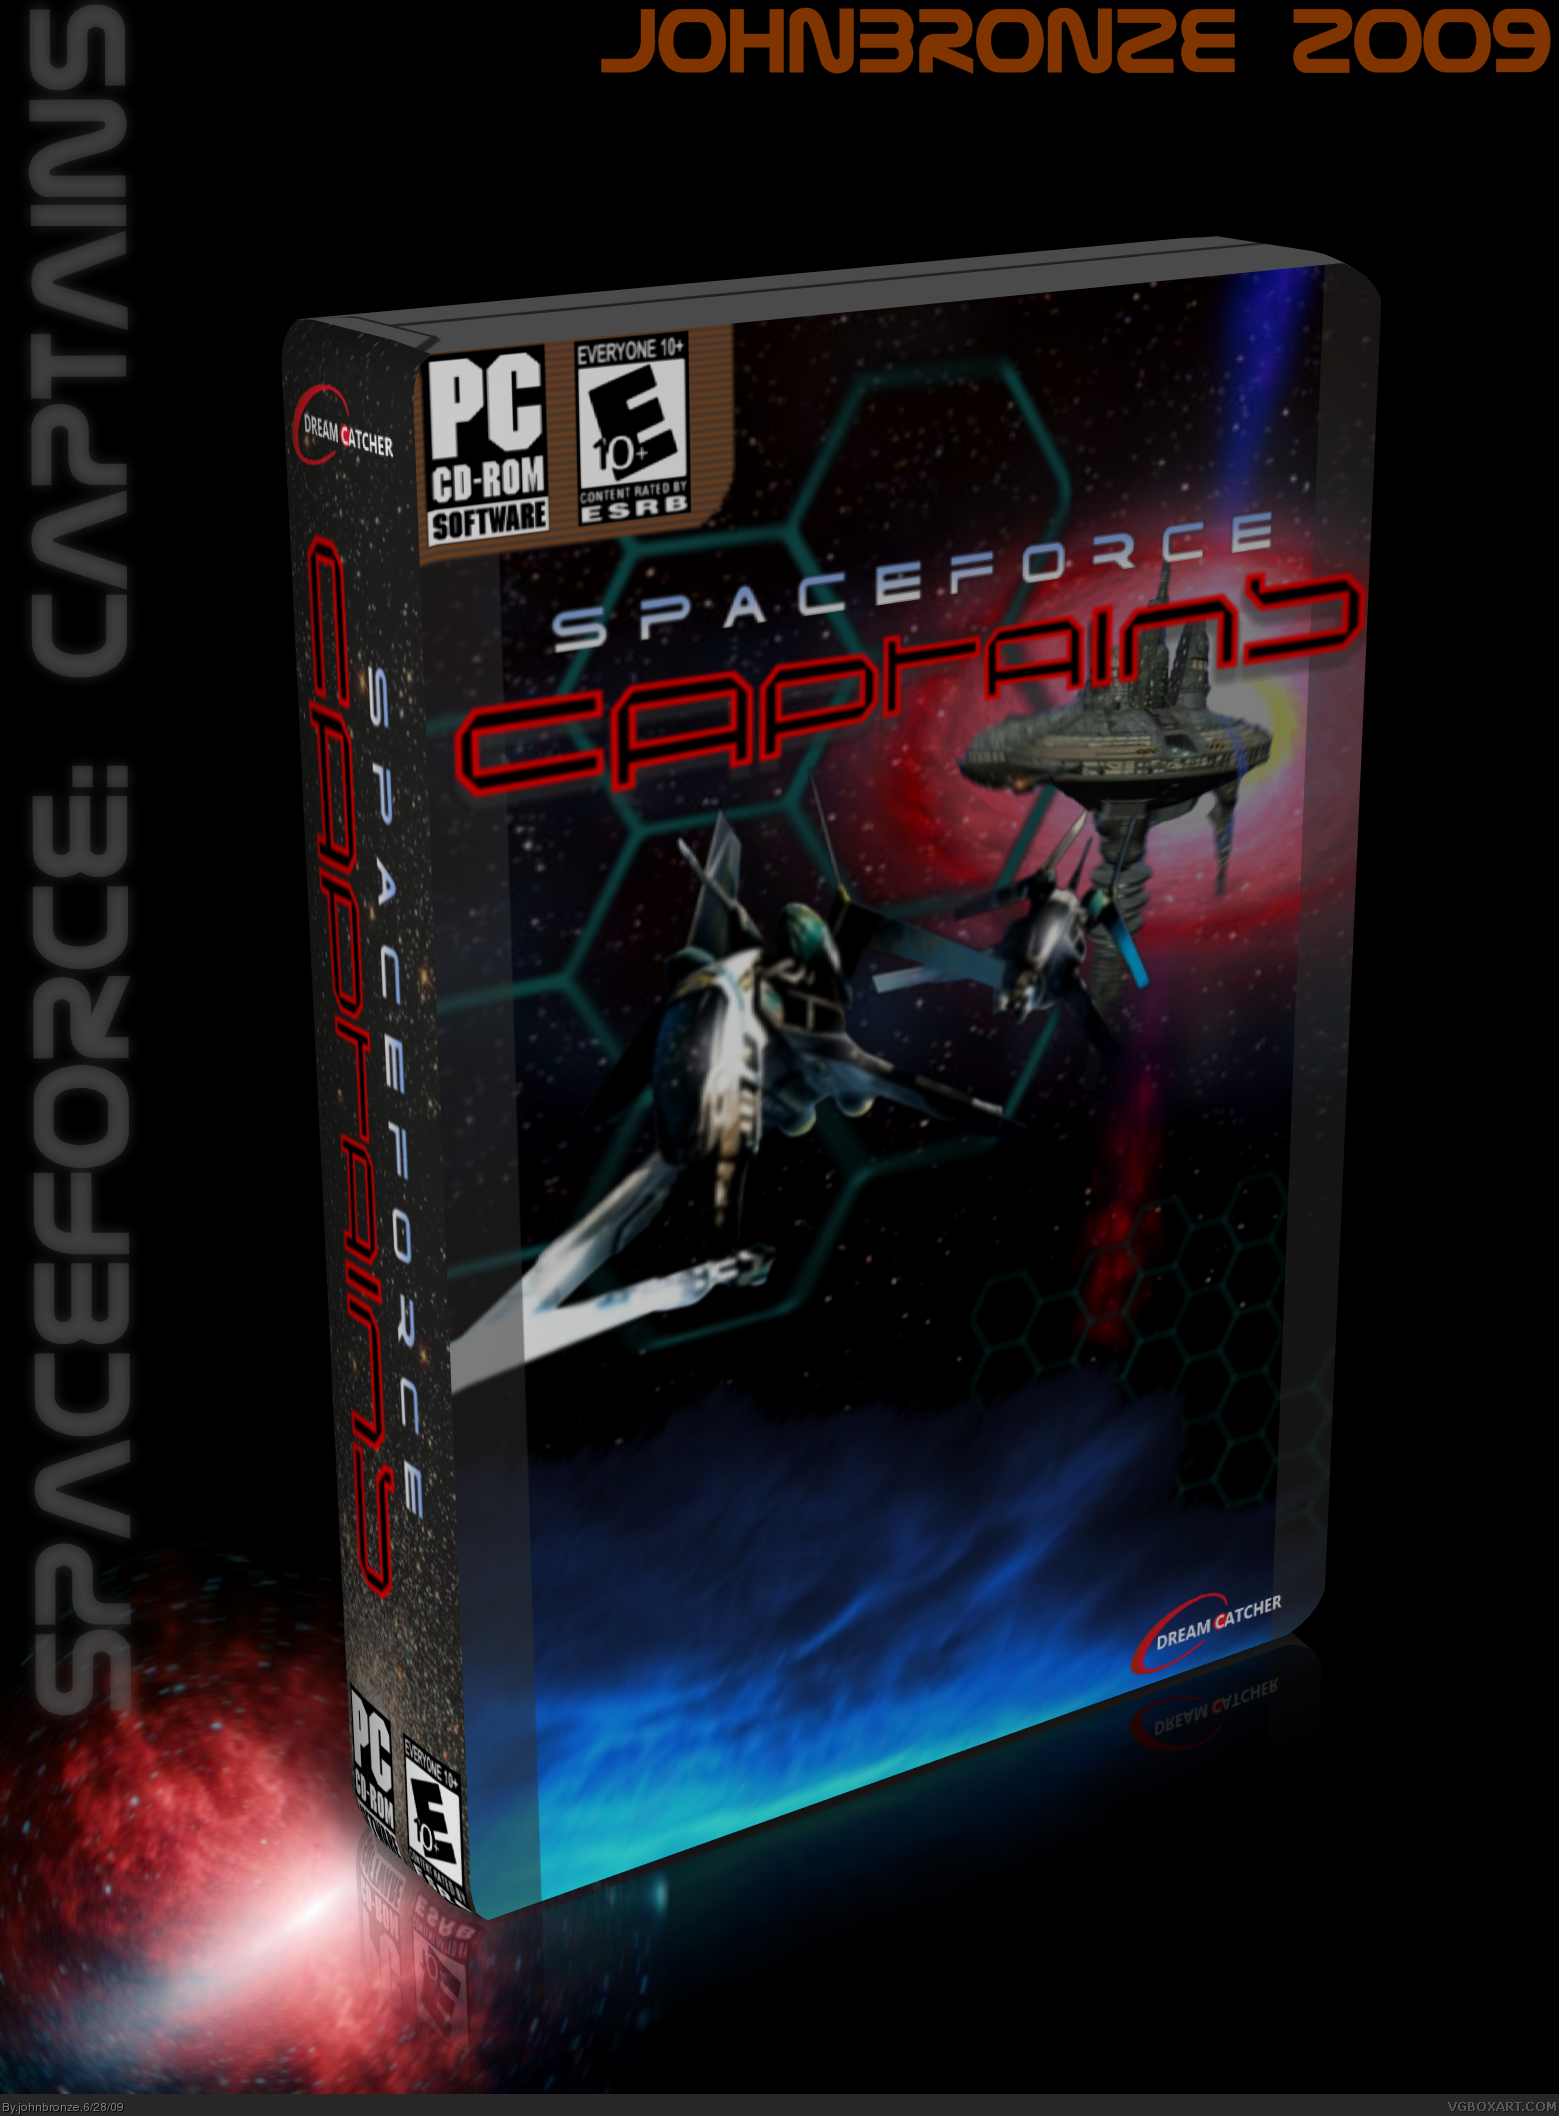 Spaceforce: Captains box cover